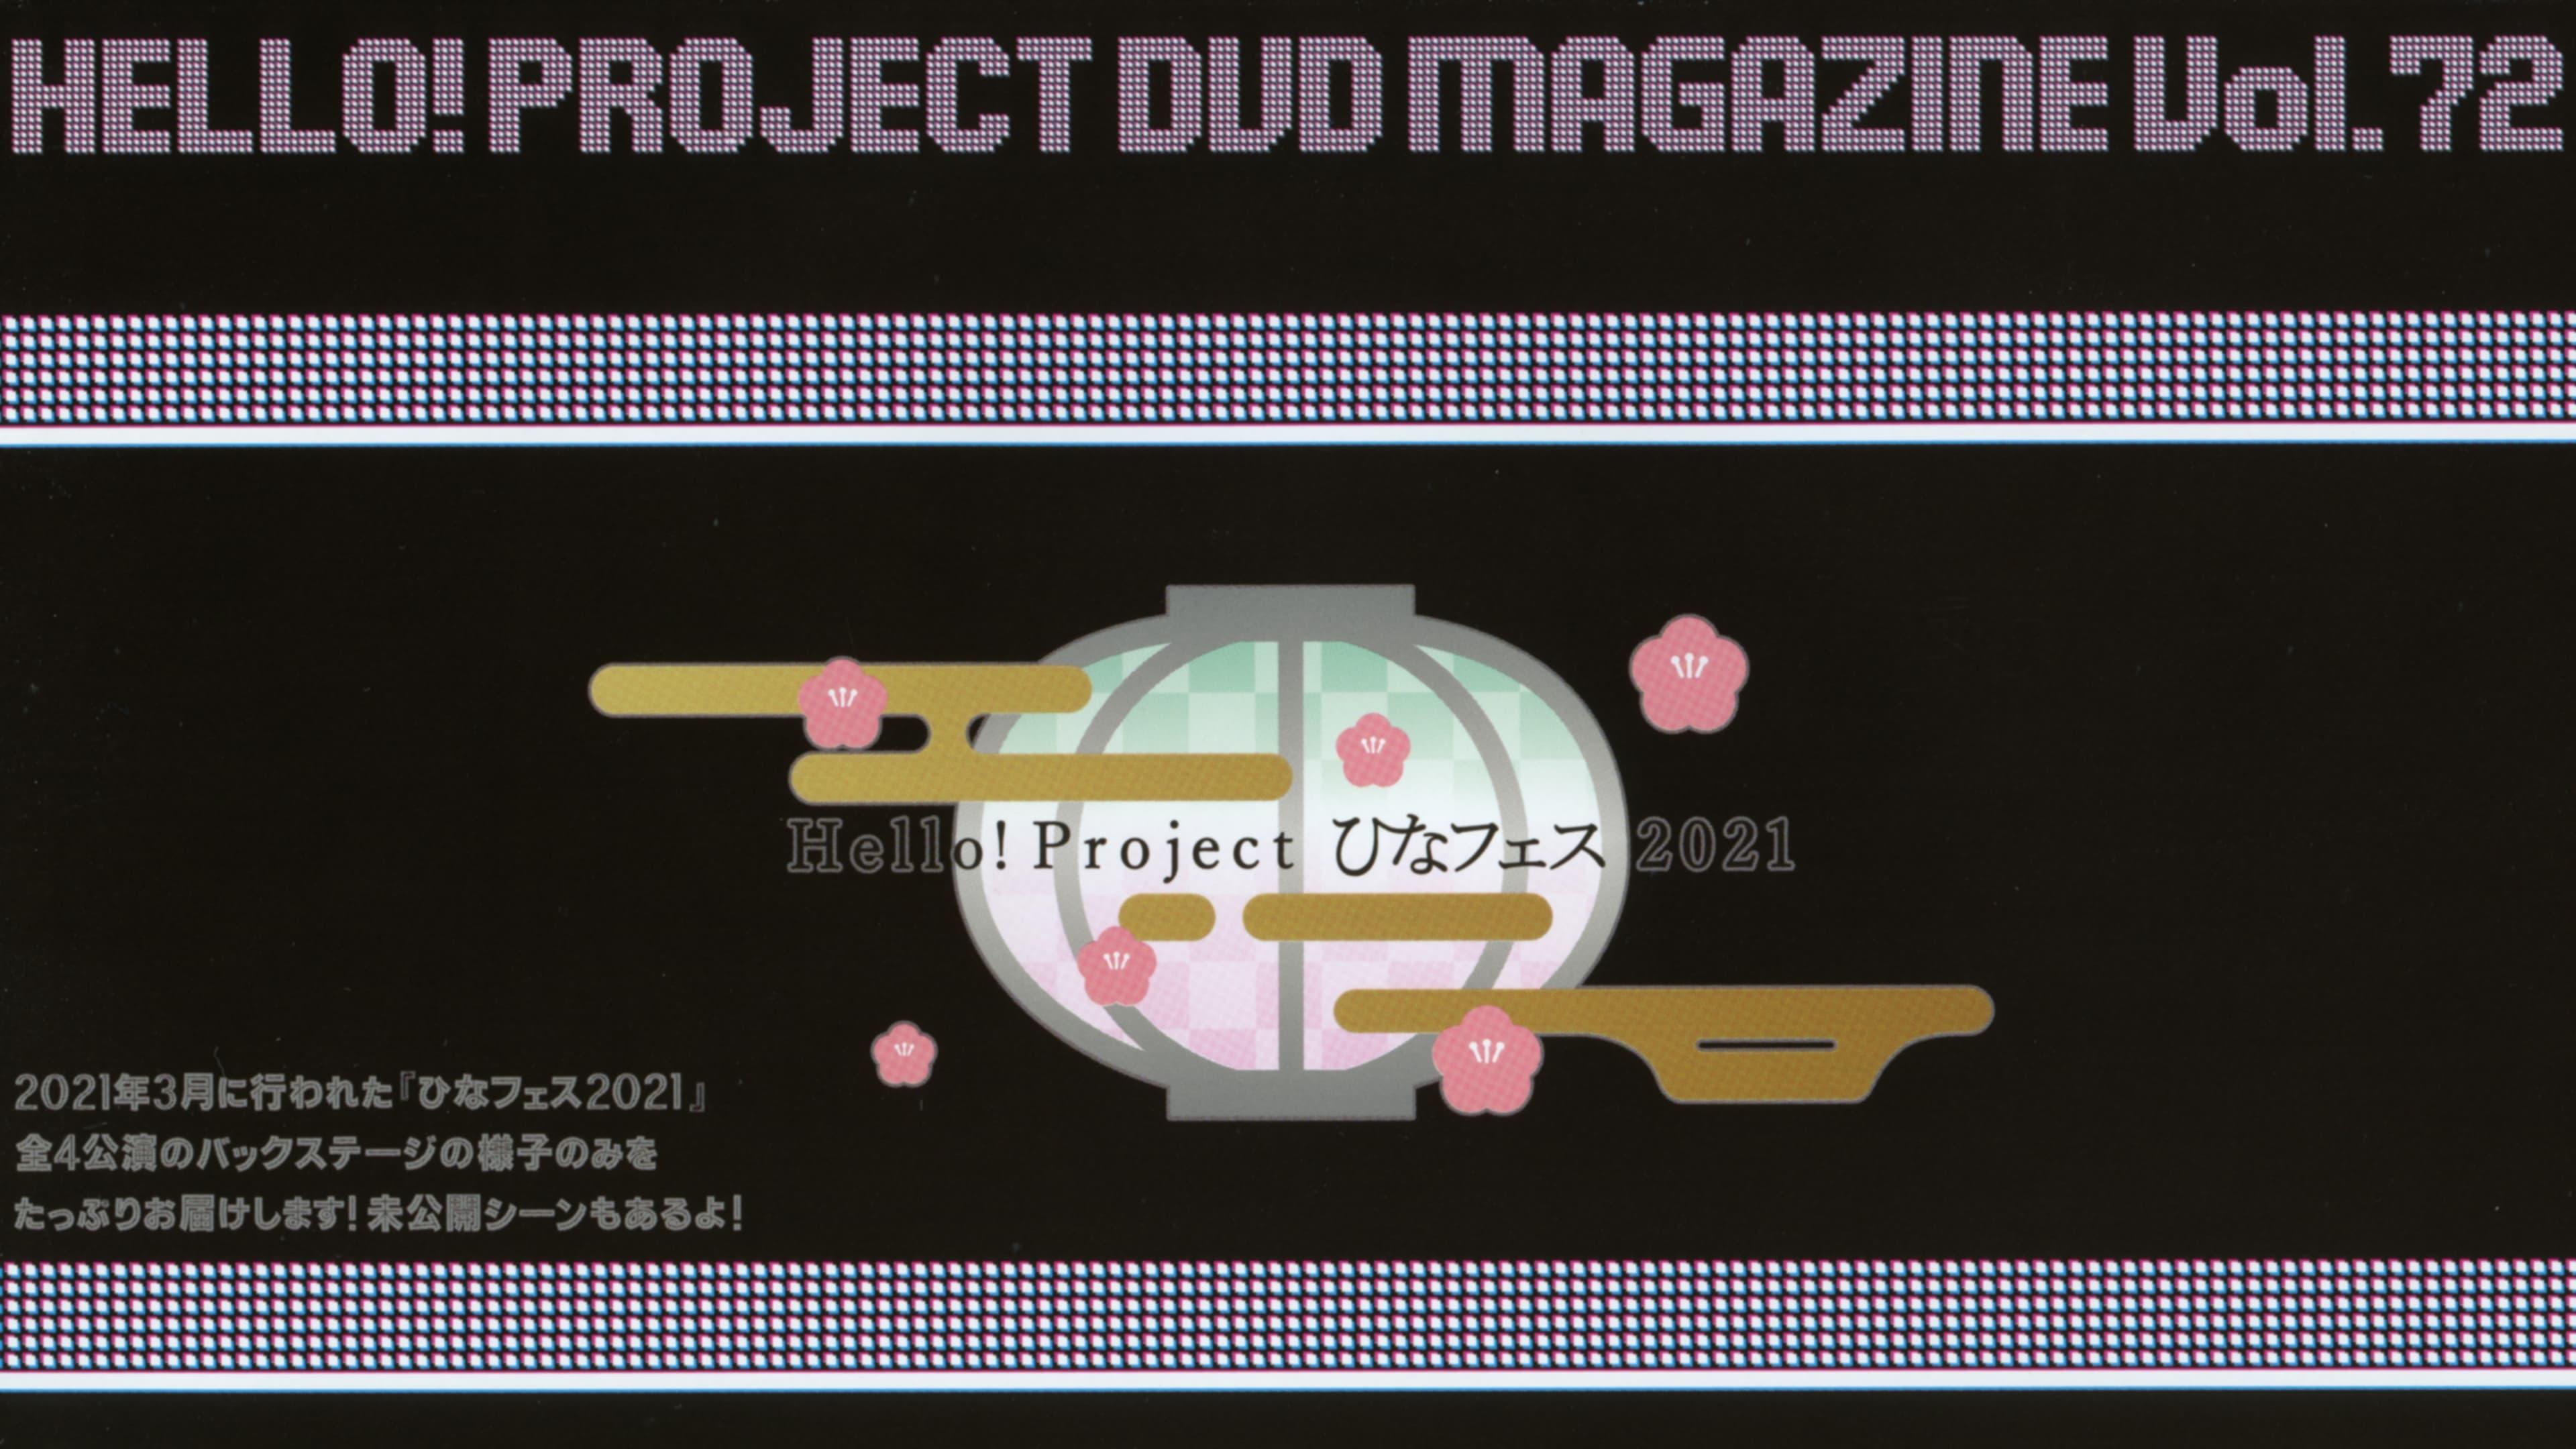 Hello! Project DVD Magazine Vol.72 backdrop